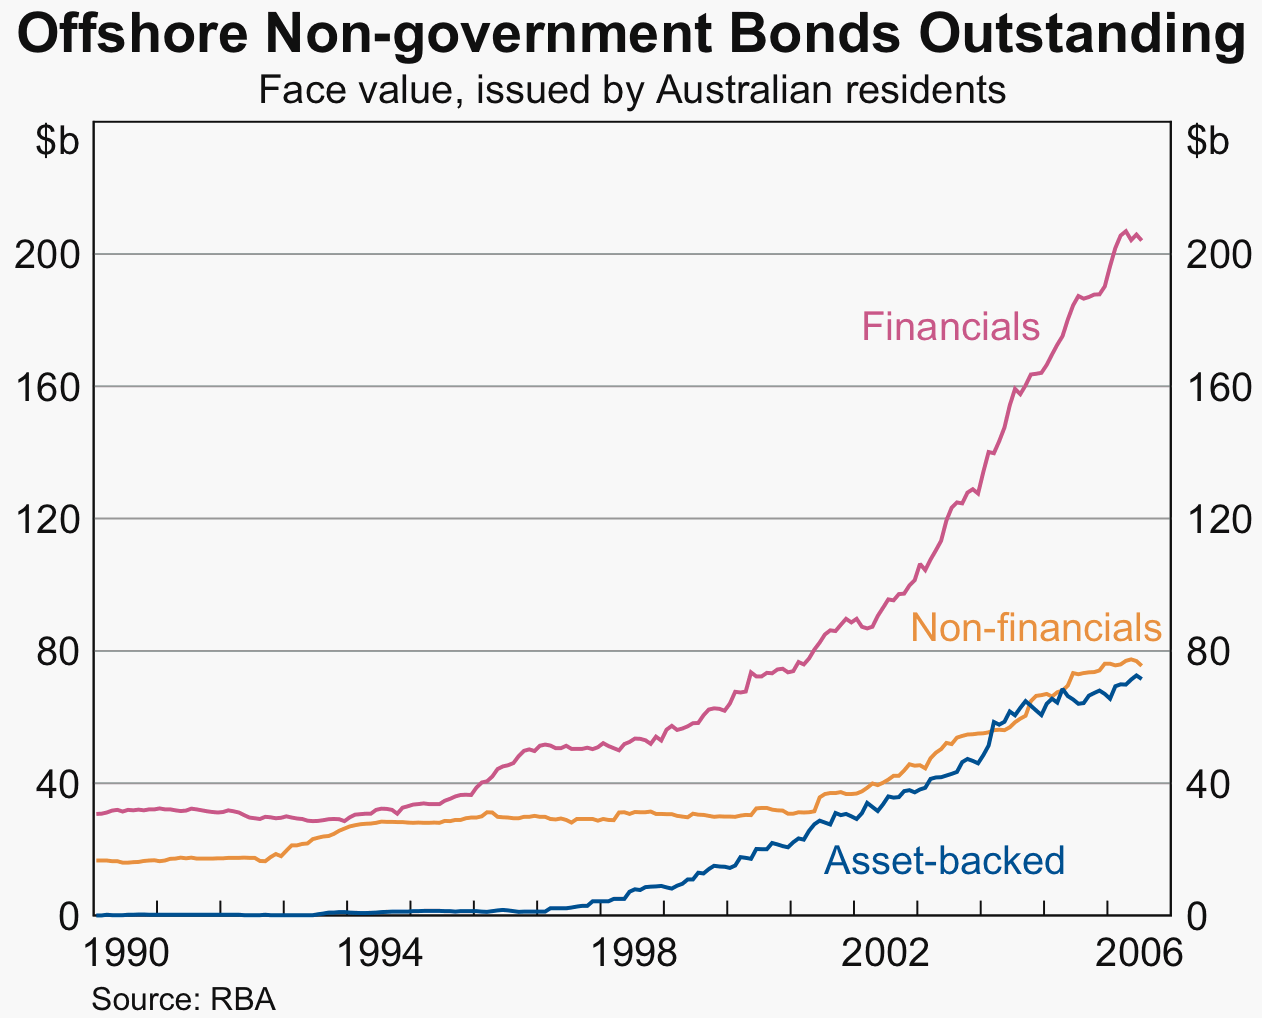 Graph 2: Offshore Non-government Bonds Outstanding